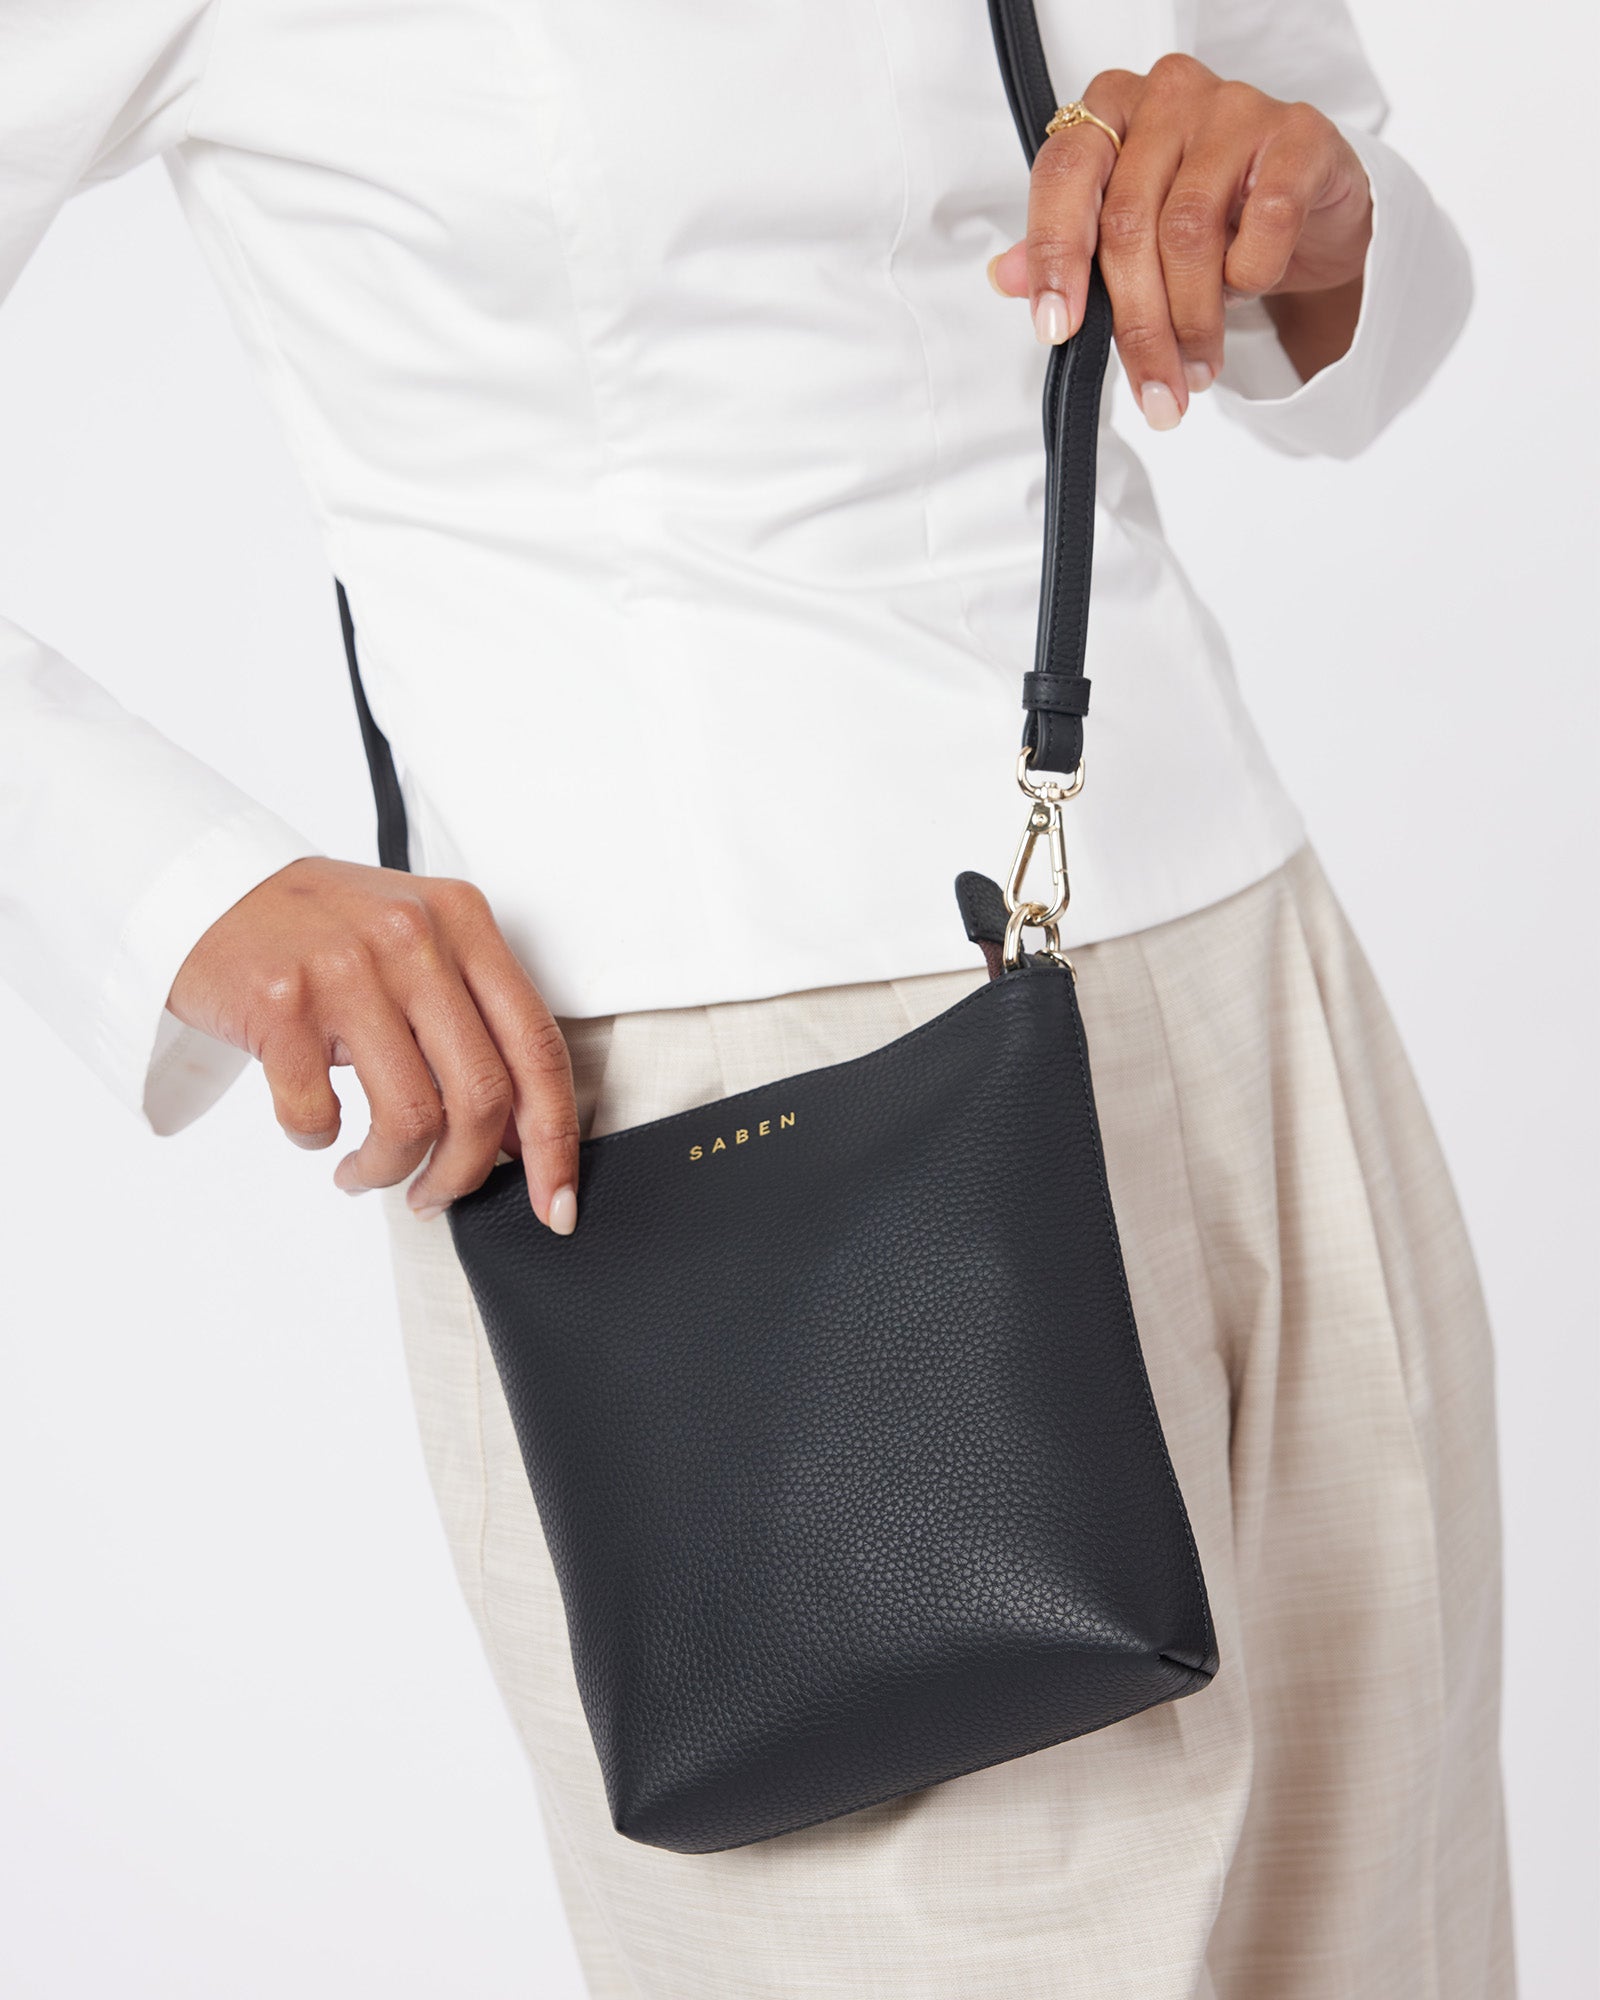 Coco Handbag | Leather mini bag | Perfect night out bag - Saben